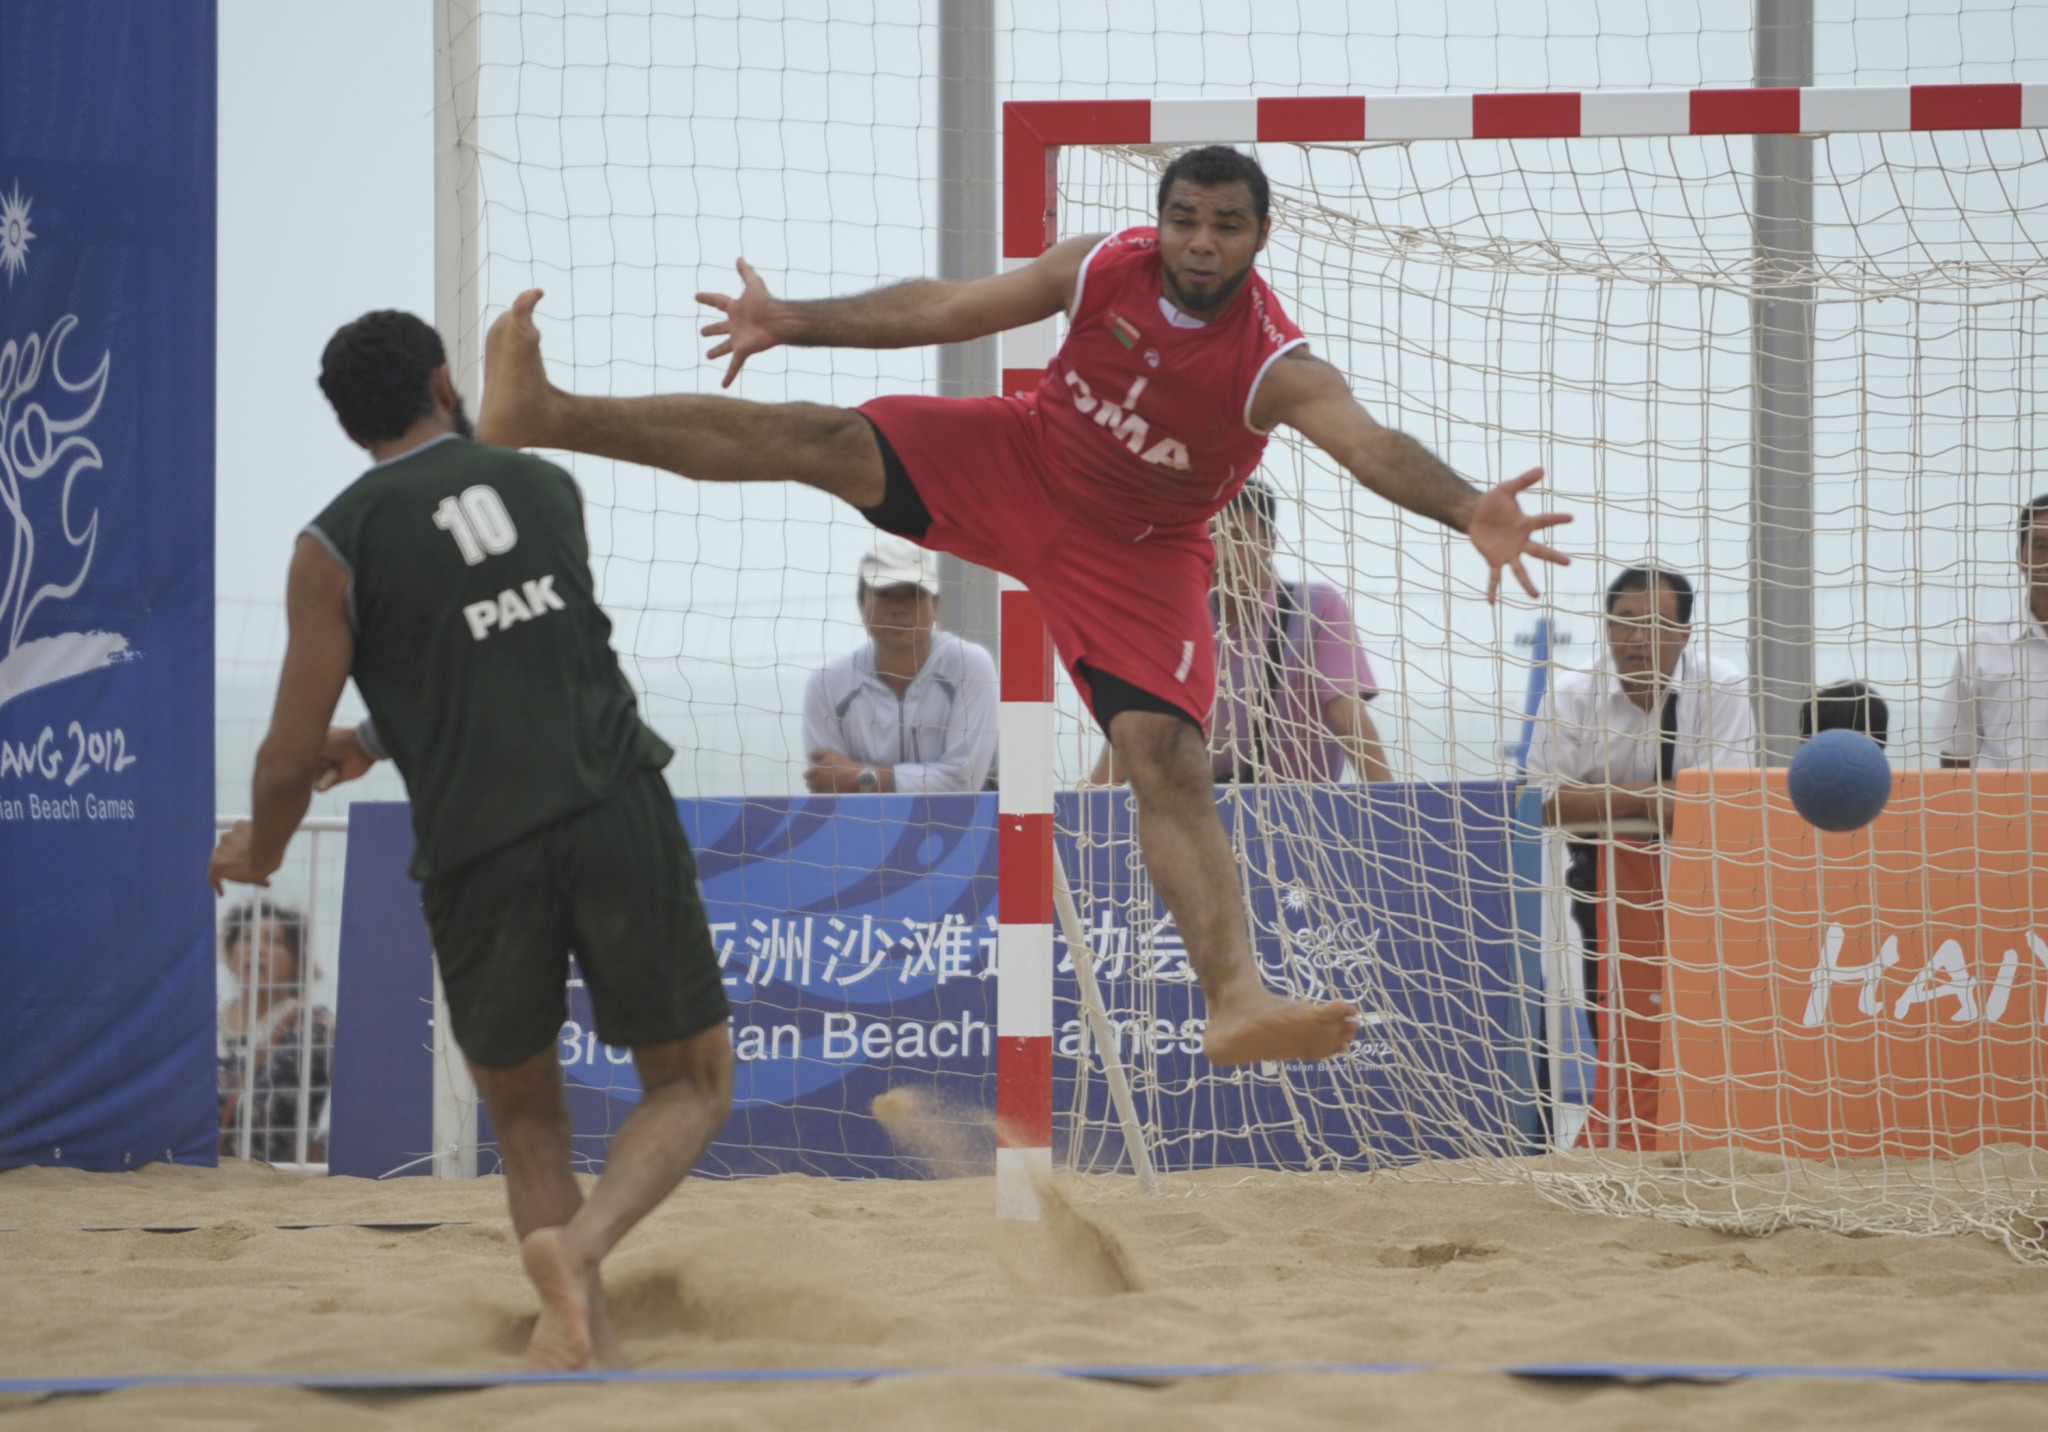 Beach handball is an Asian Beach Games sport ©Getty Images